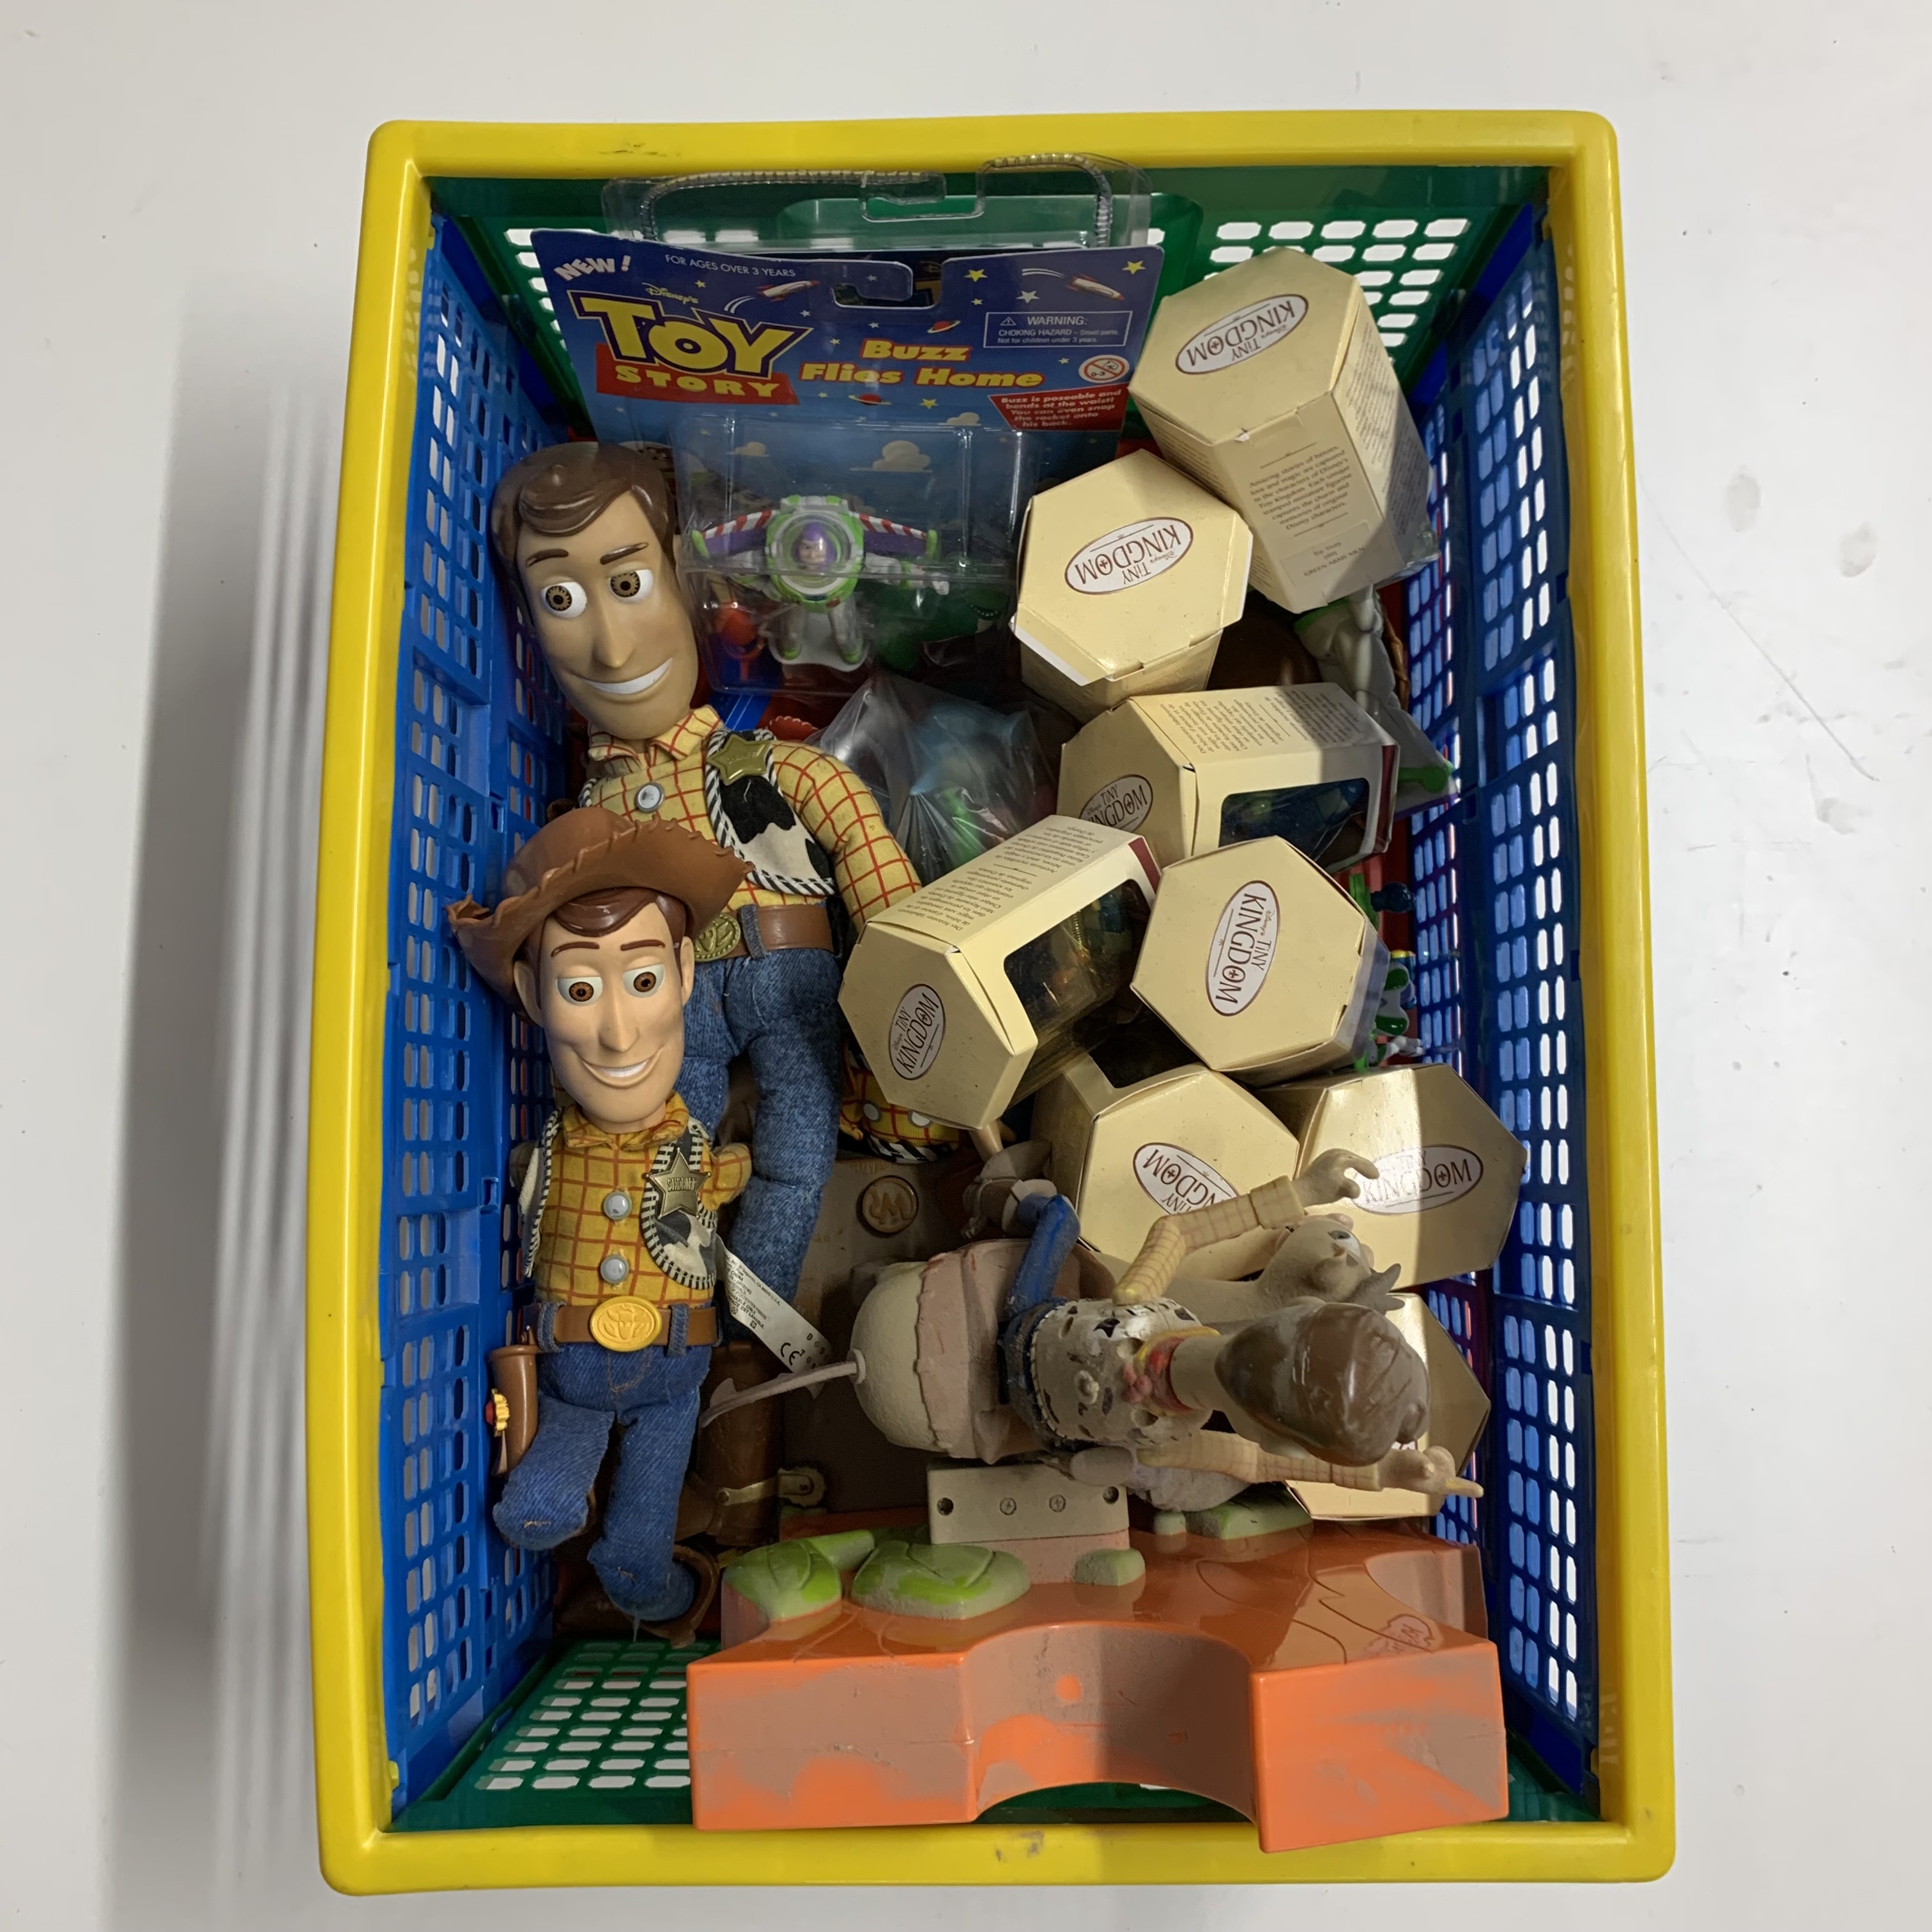 A quantity of Disney Toy Story figures etc.